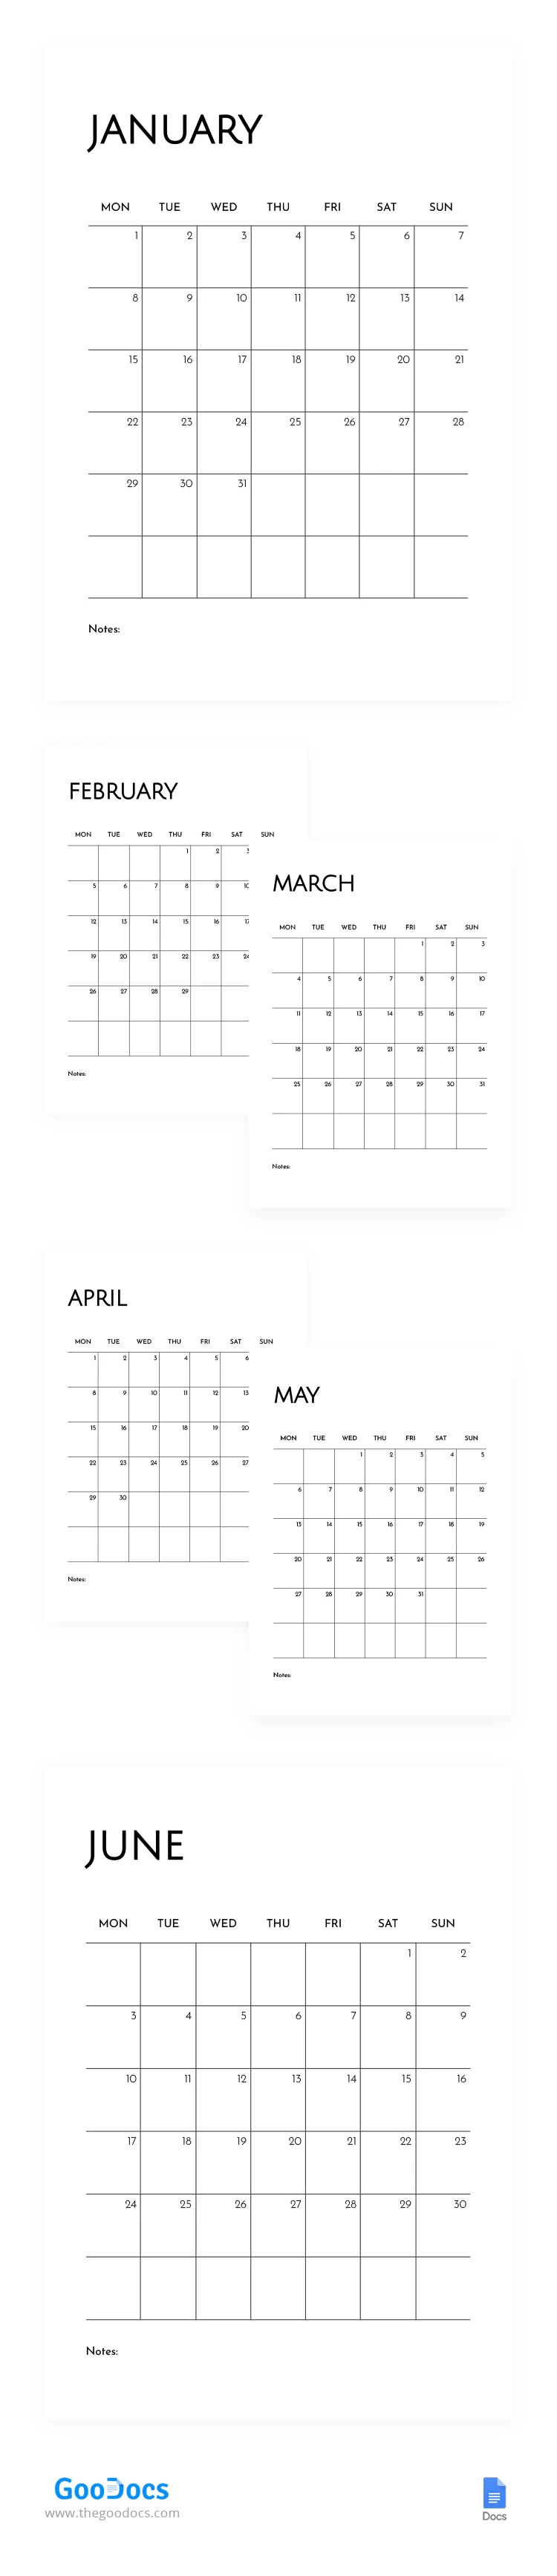 Calendario mensile semplice 2024 - free Google Docs Template - 10068564